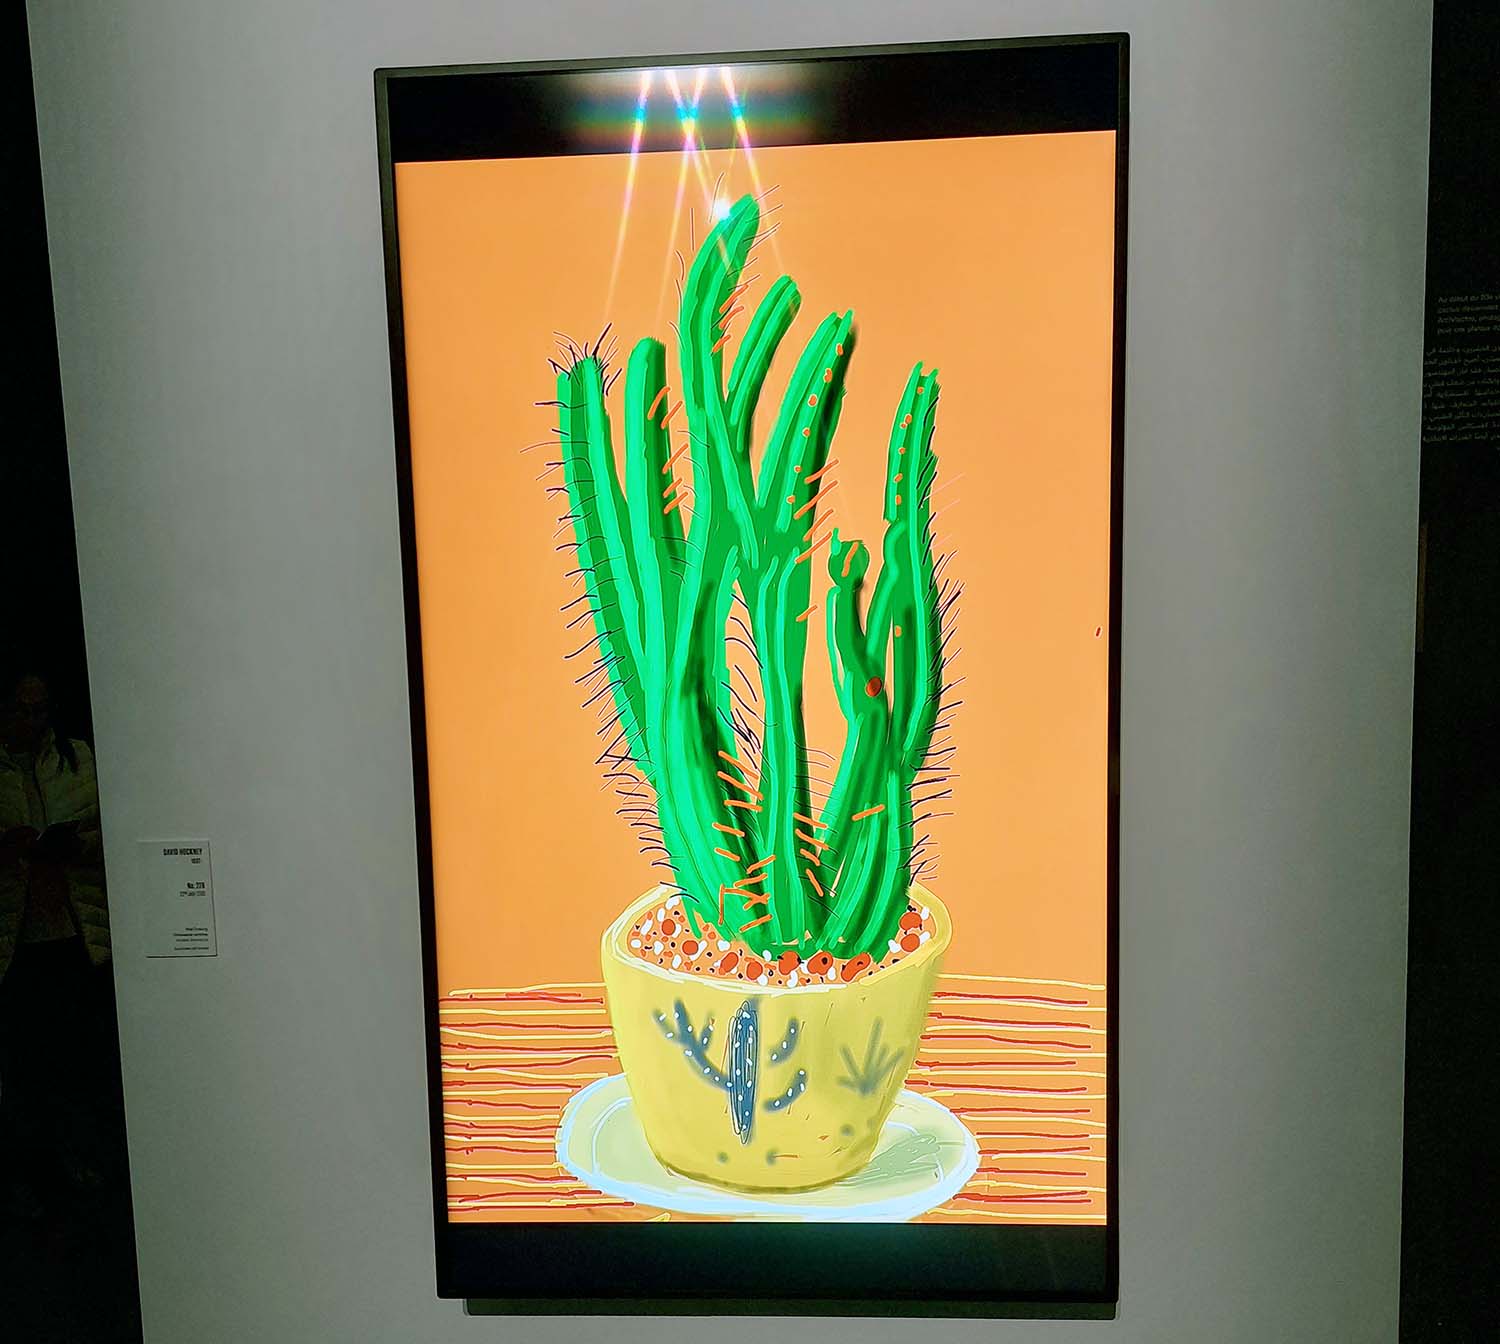 David Hockney's painting on the iPad